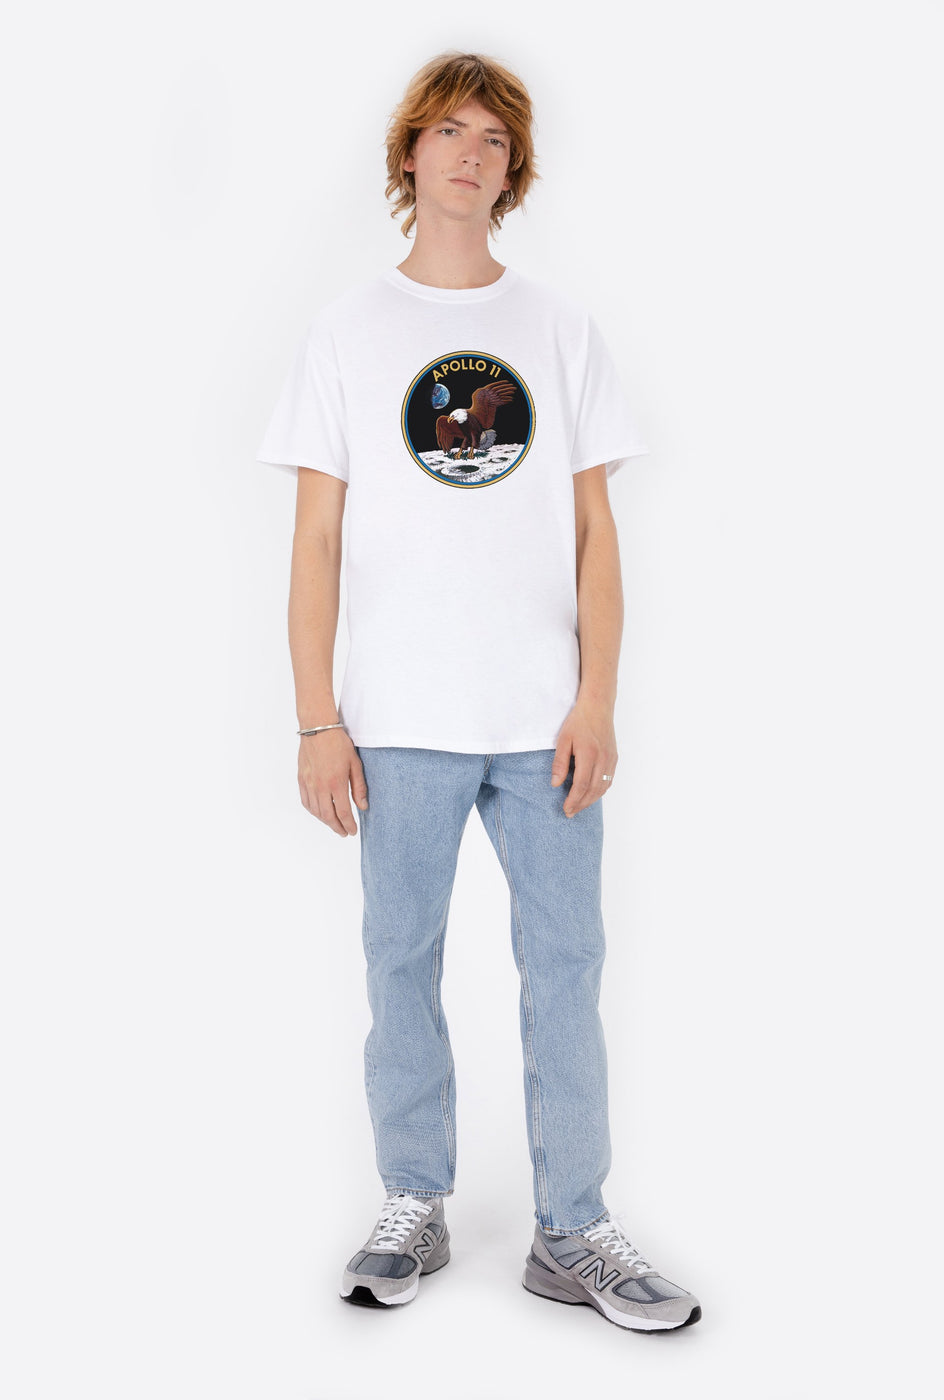 T-Shirt S/S Apollo 11 Eagle